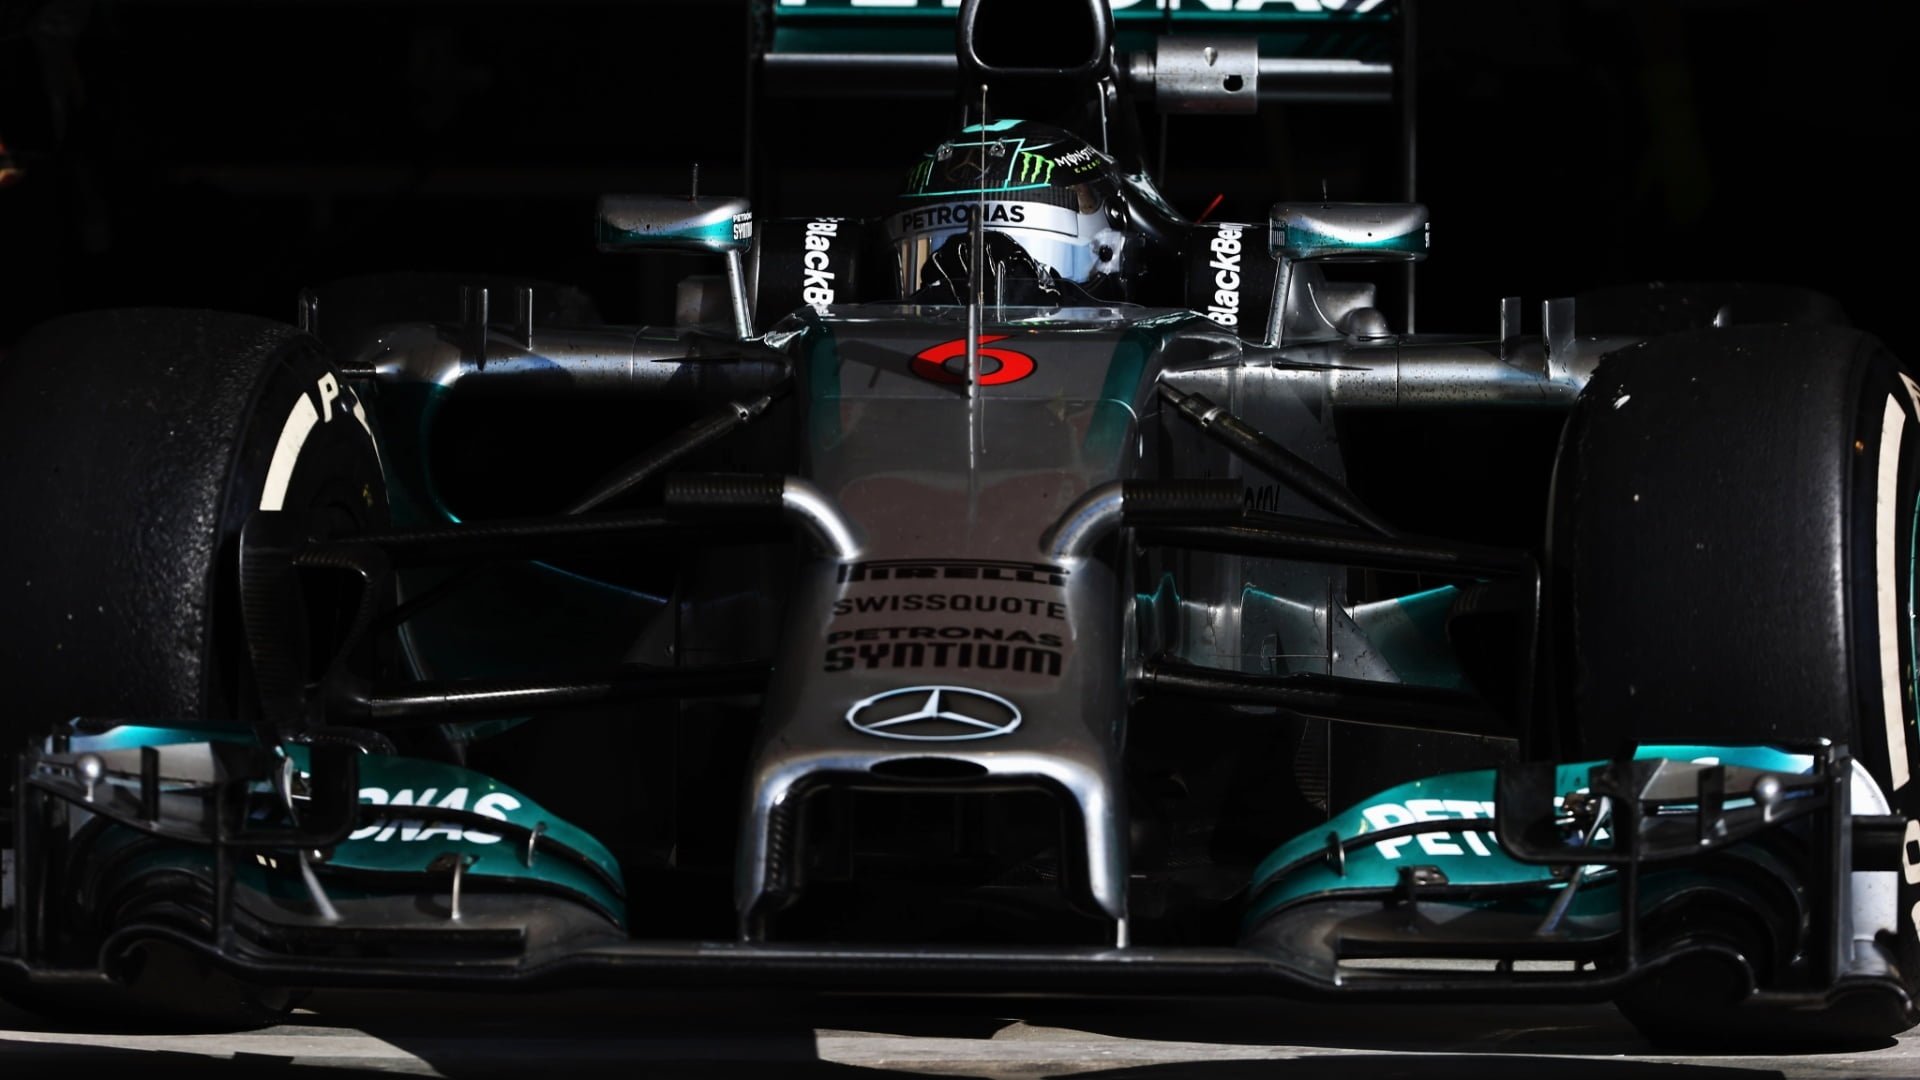 green and gray Formula 1 car, Mercedes AMG Petronas, Nico Rosberg